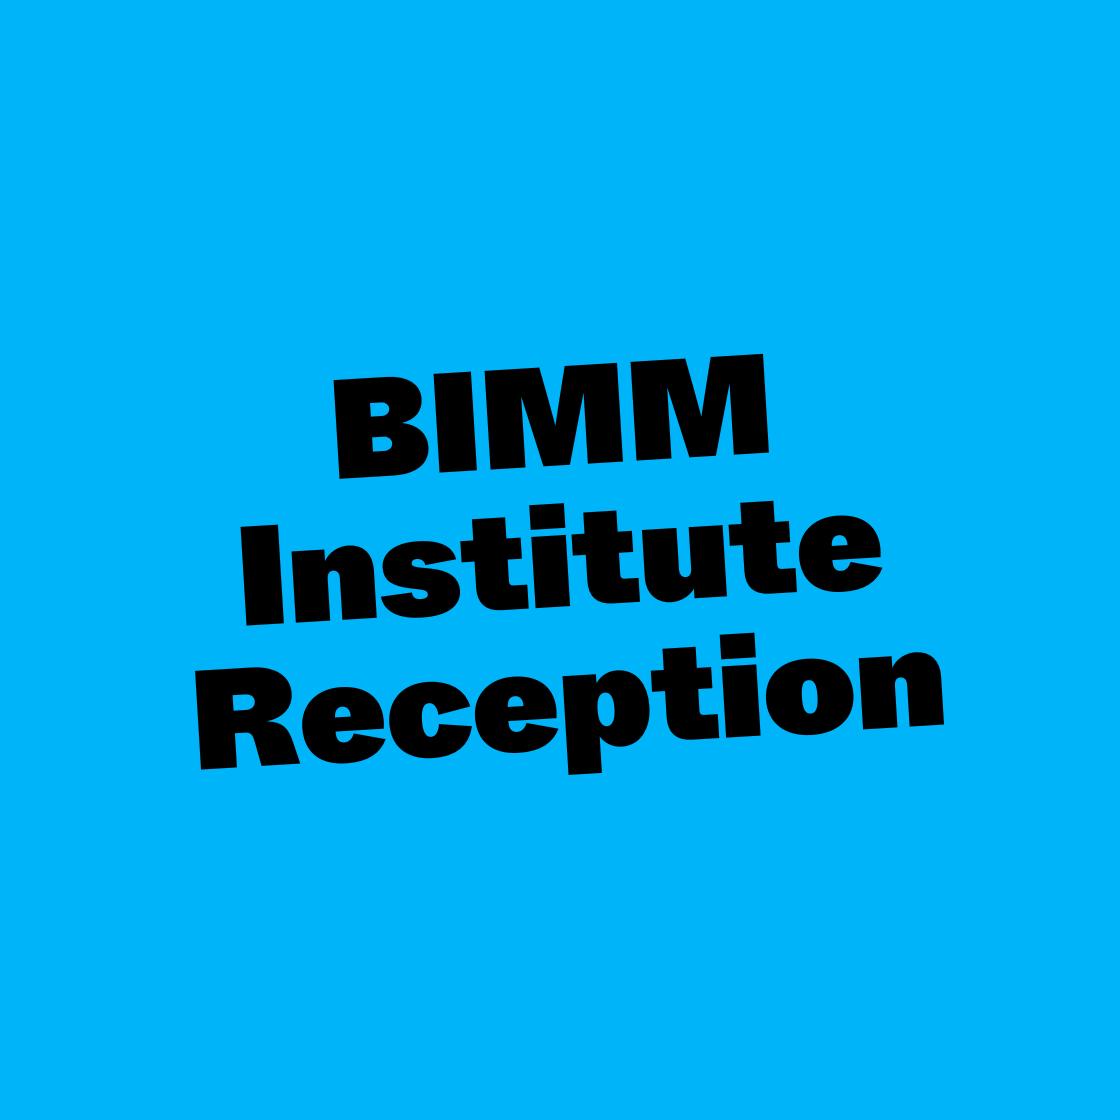 BIMM Institute Reception